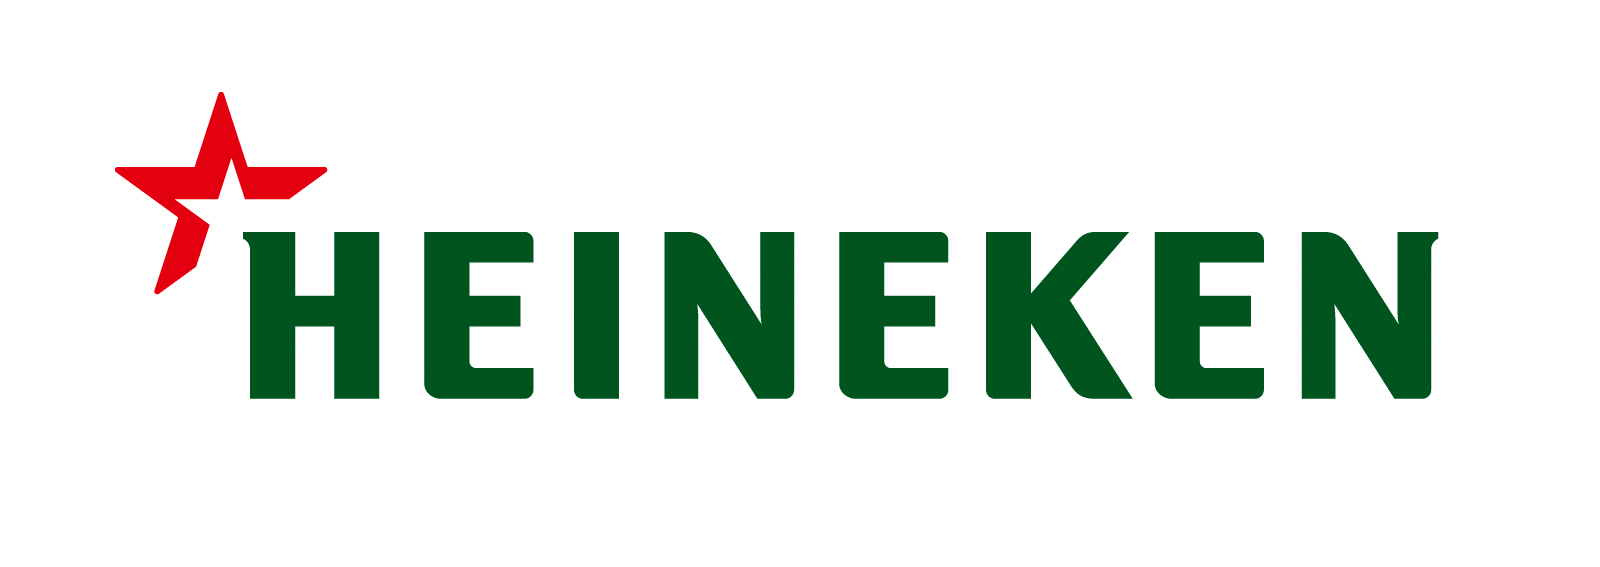 Pic: the new HEINEKEN corpora